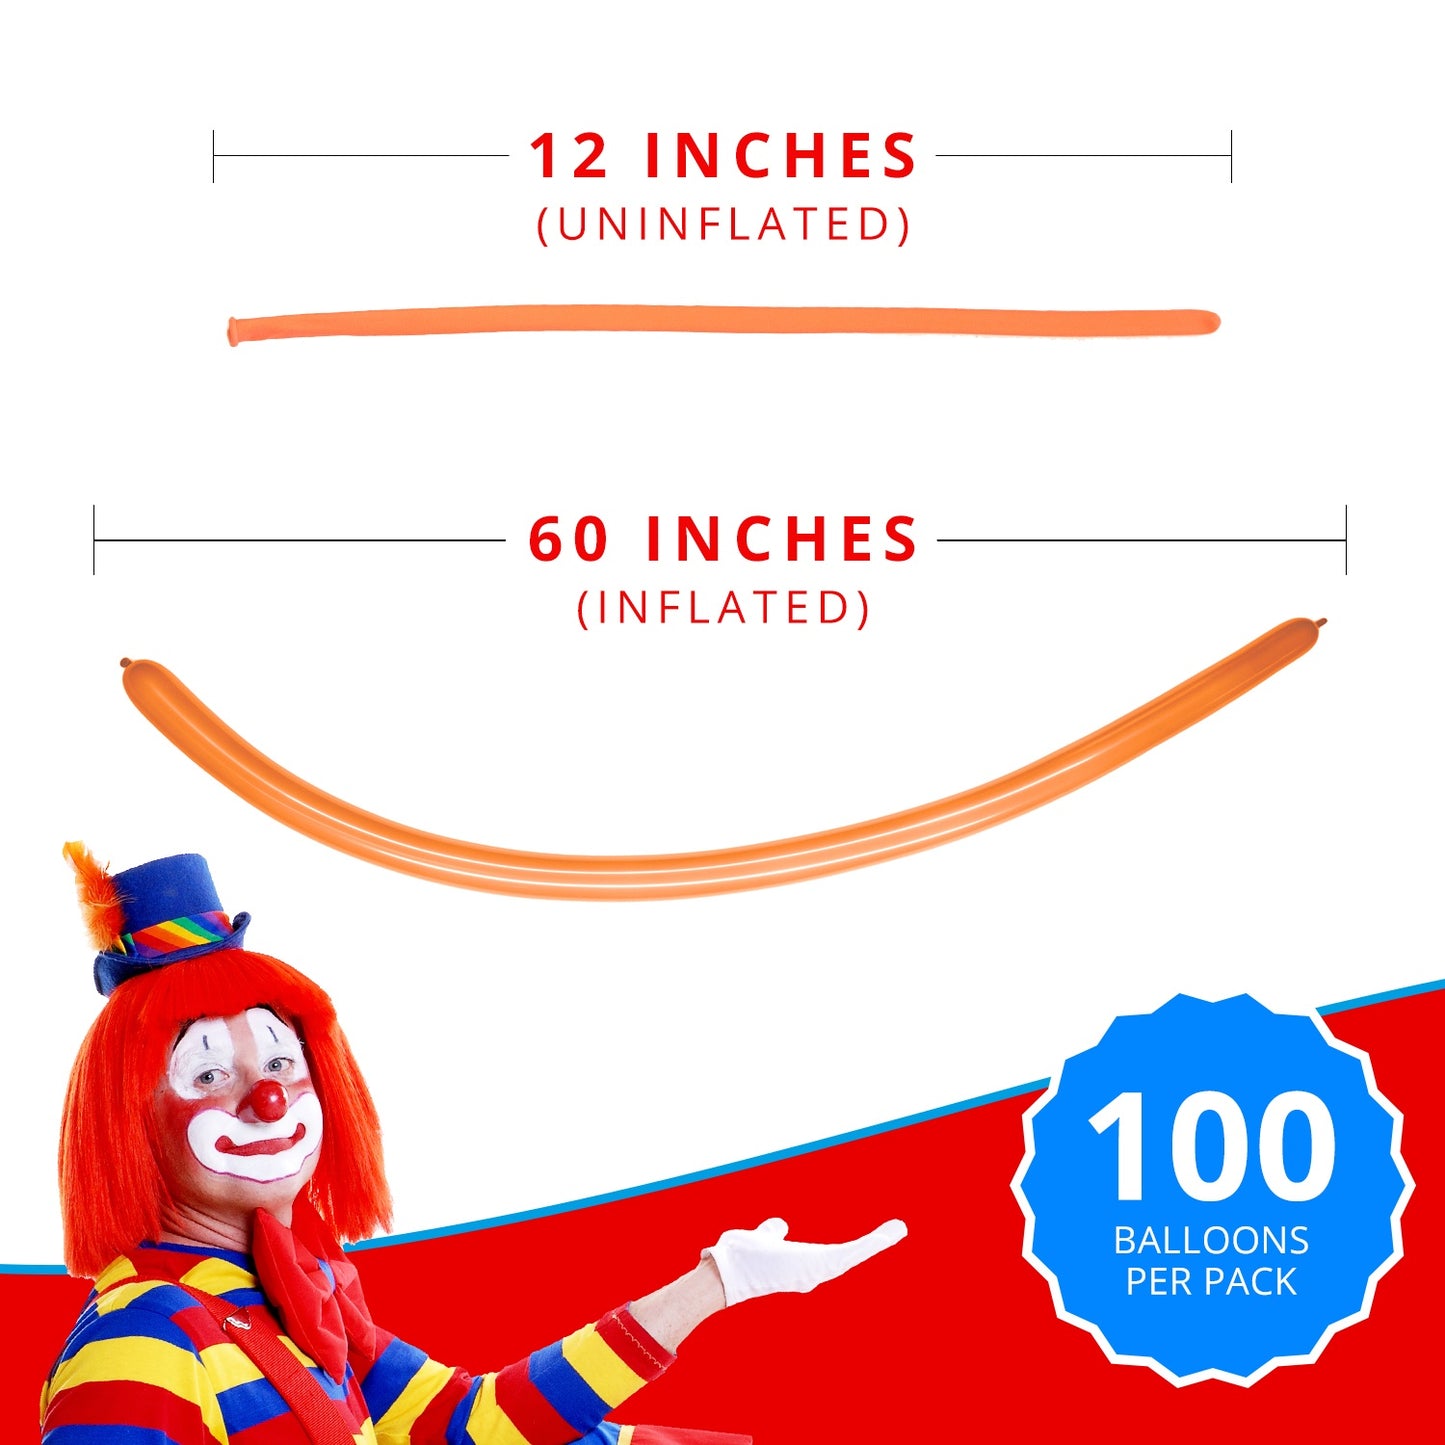 Clownatex 260 Balloons - Orange (100 pcs)